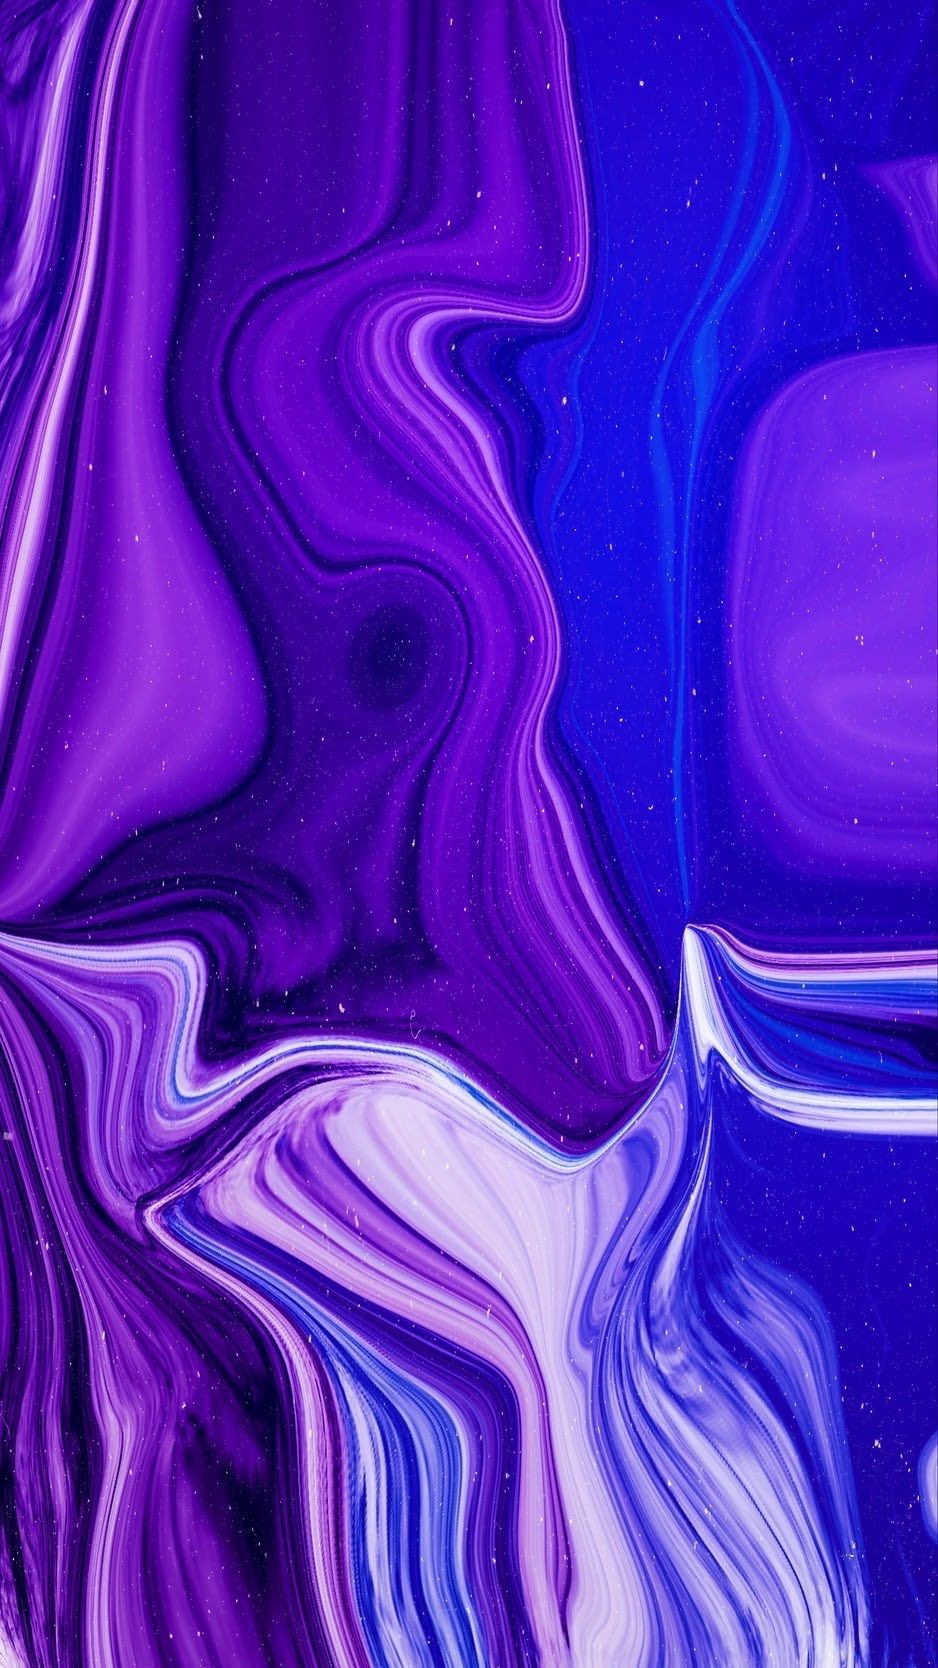 iPhone Wallpaper. Geometric wallpaper iphone, Purple wallpaper hd, iPhone wallpaper